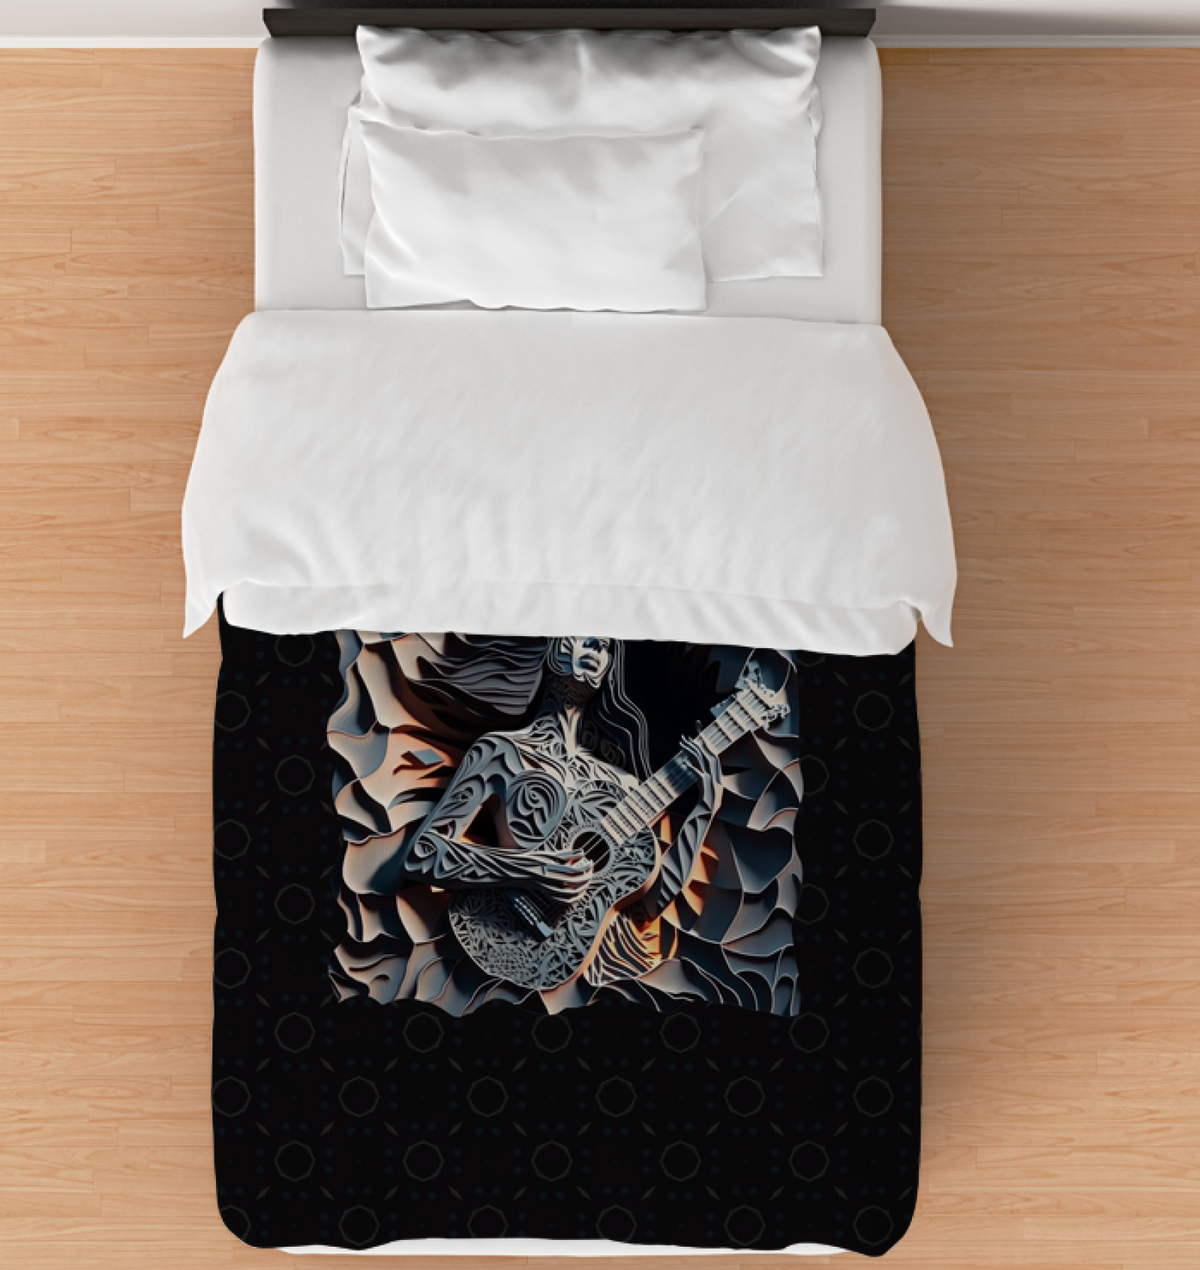 Titan's Tapestry Comforter